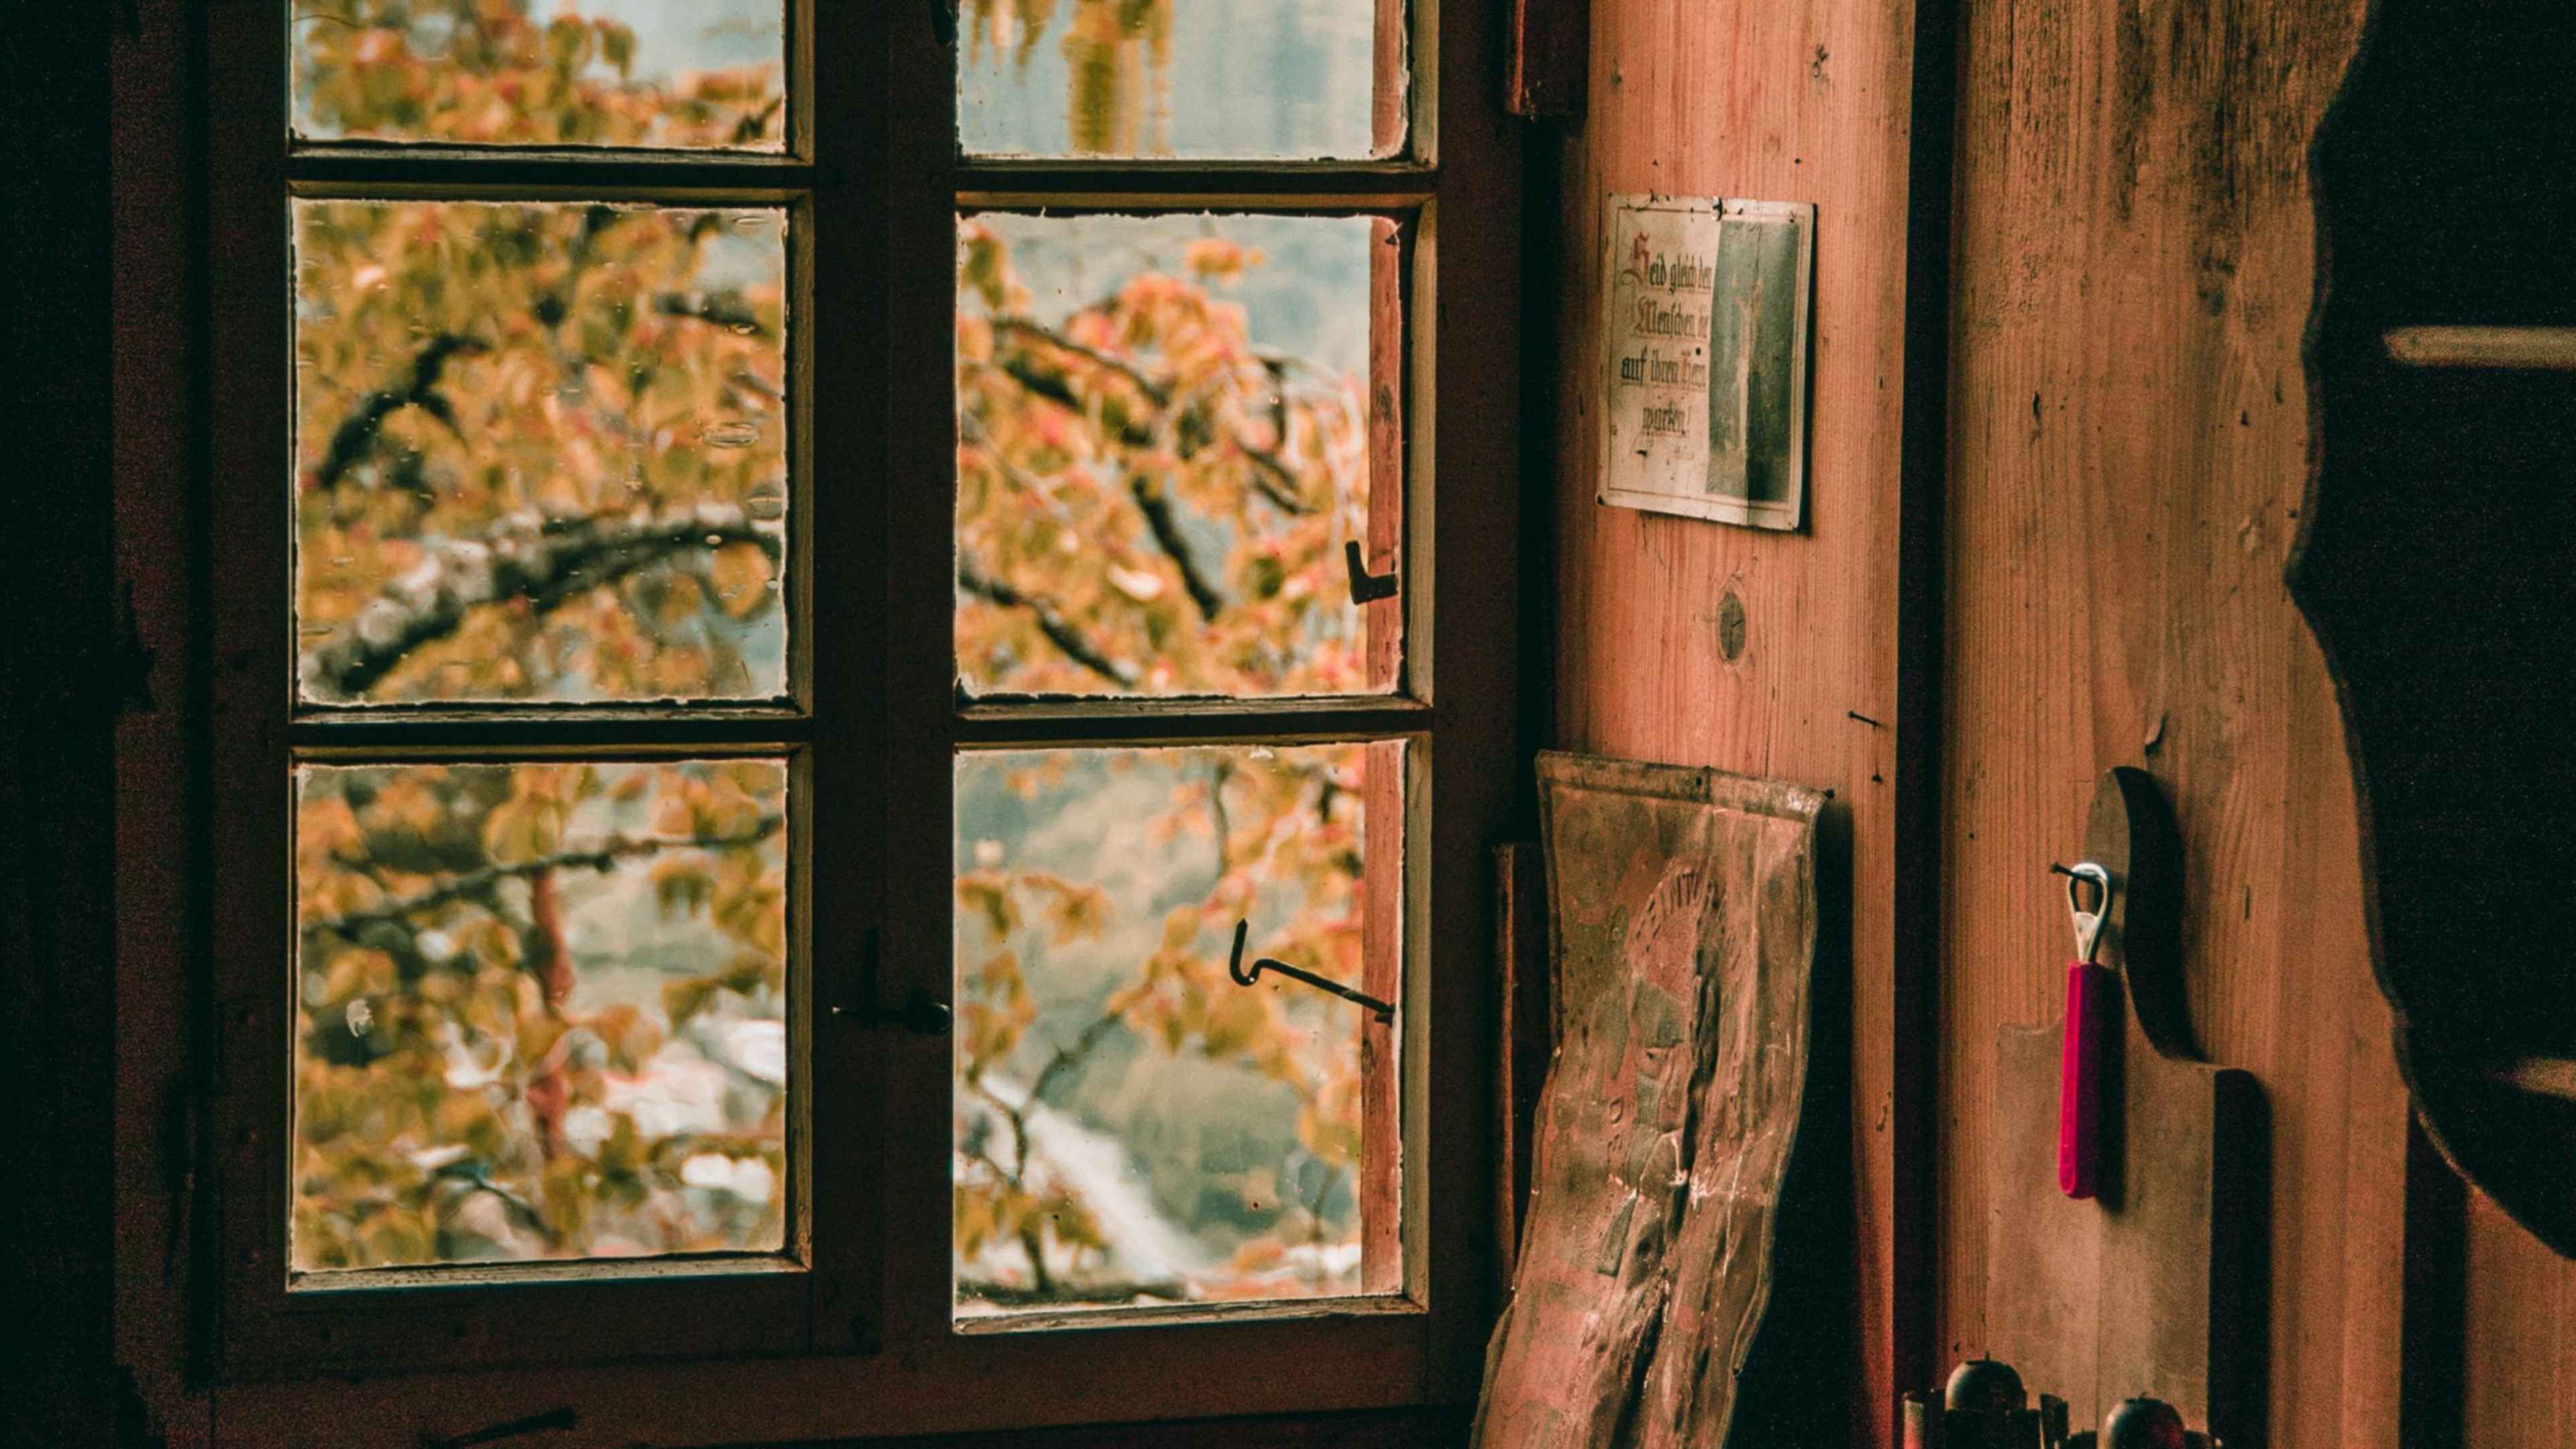 Обои на окно рабочее. Вид из деревенского окна. Старое окно изнутри. Окно дерево. Окно деревянное старое изнутри.